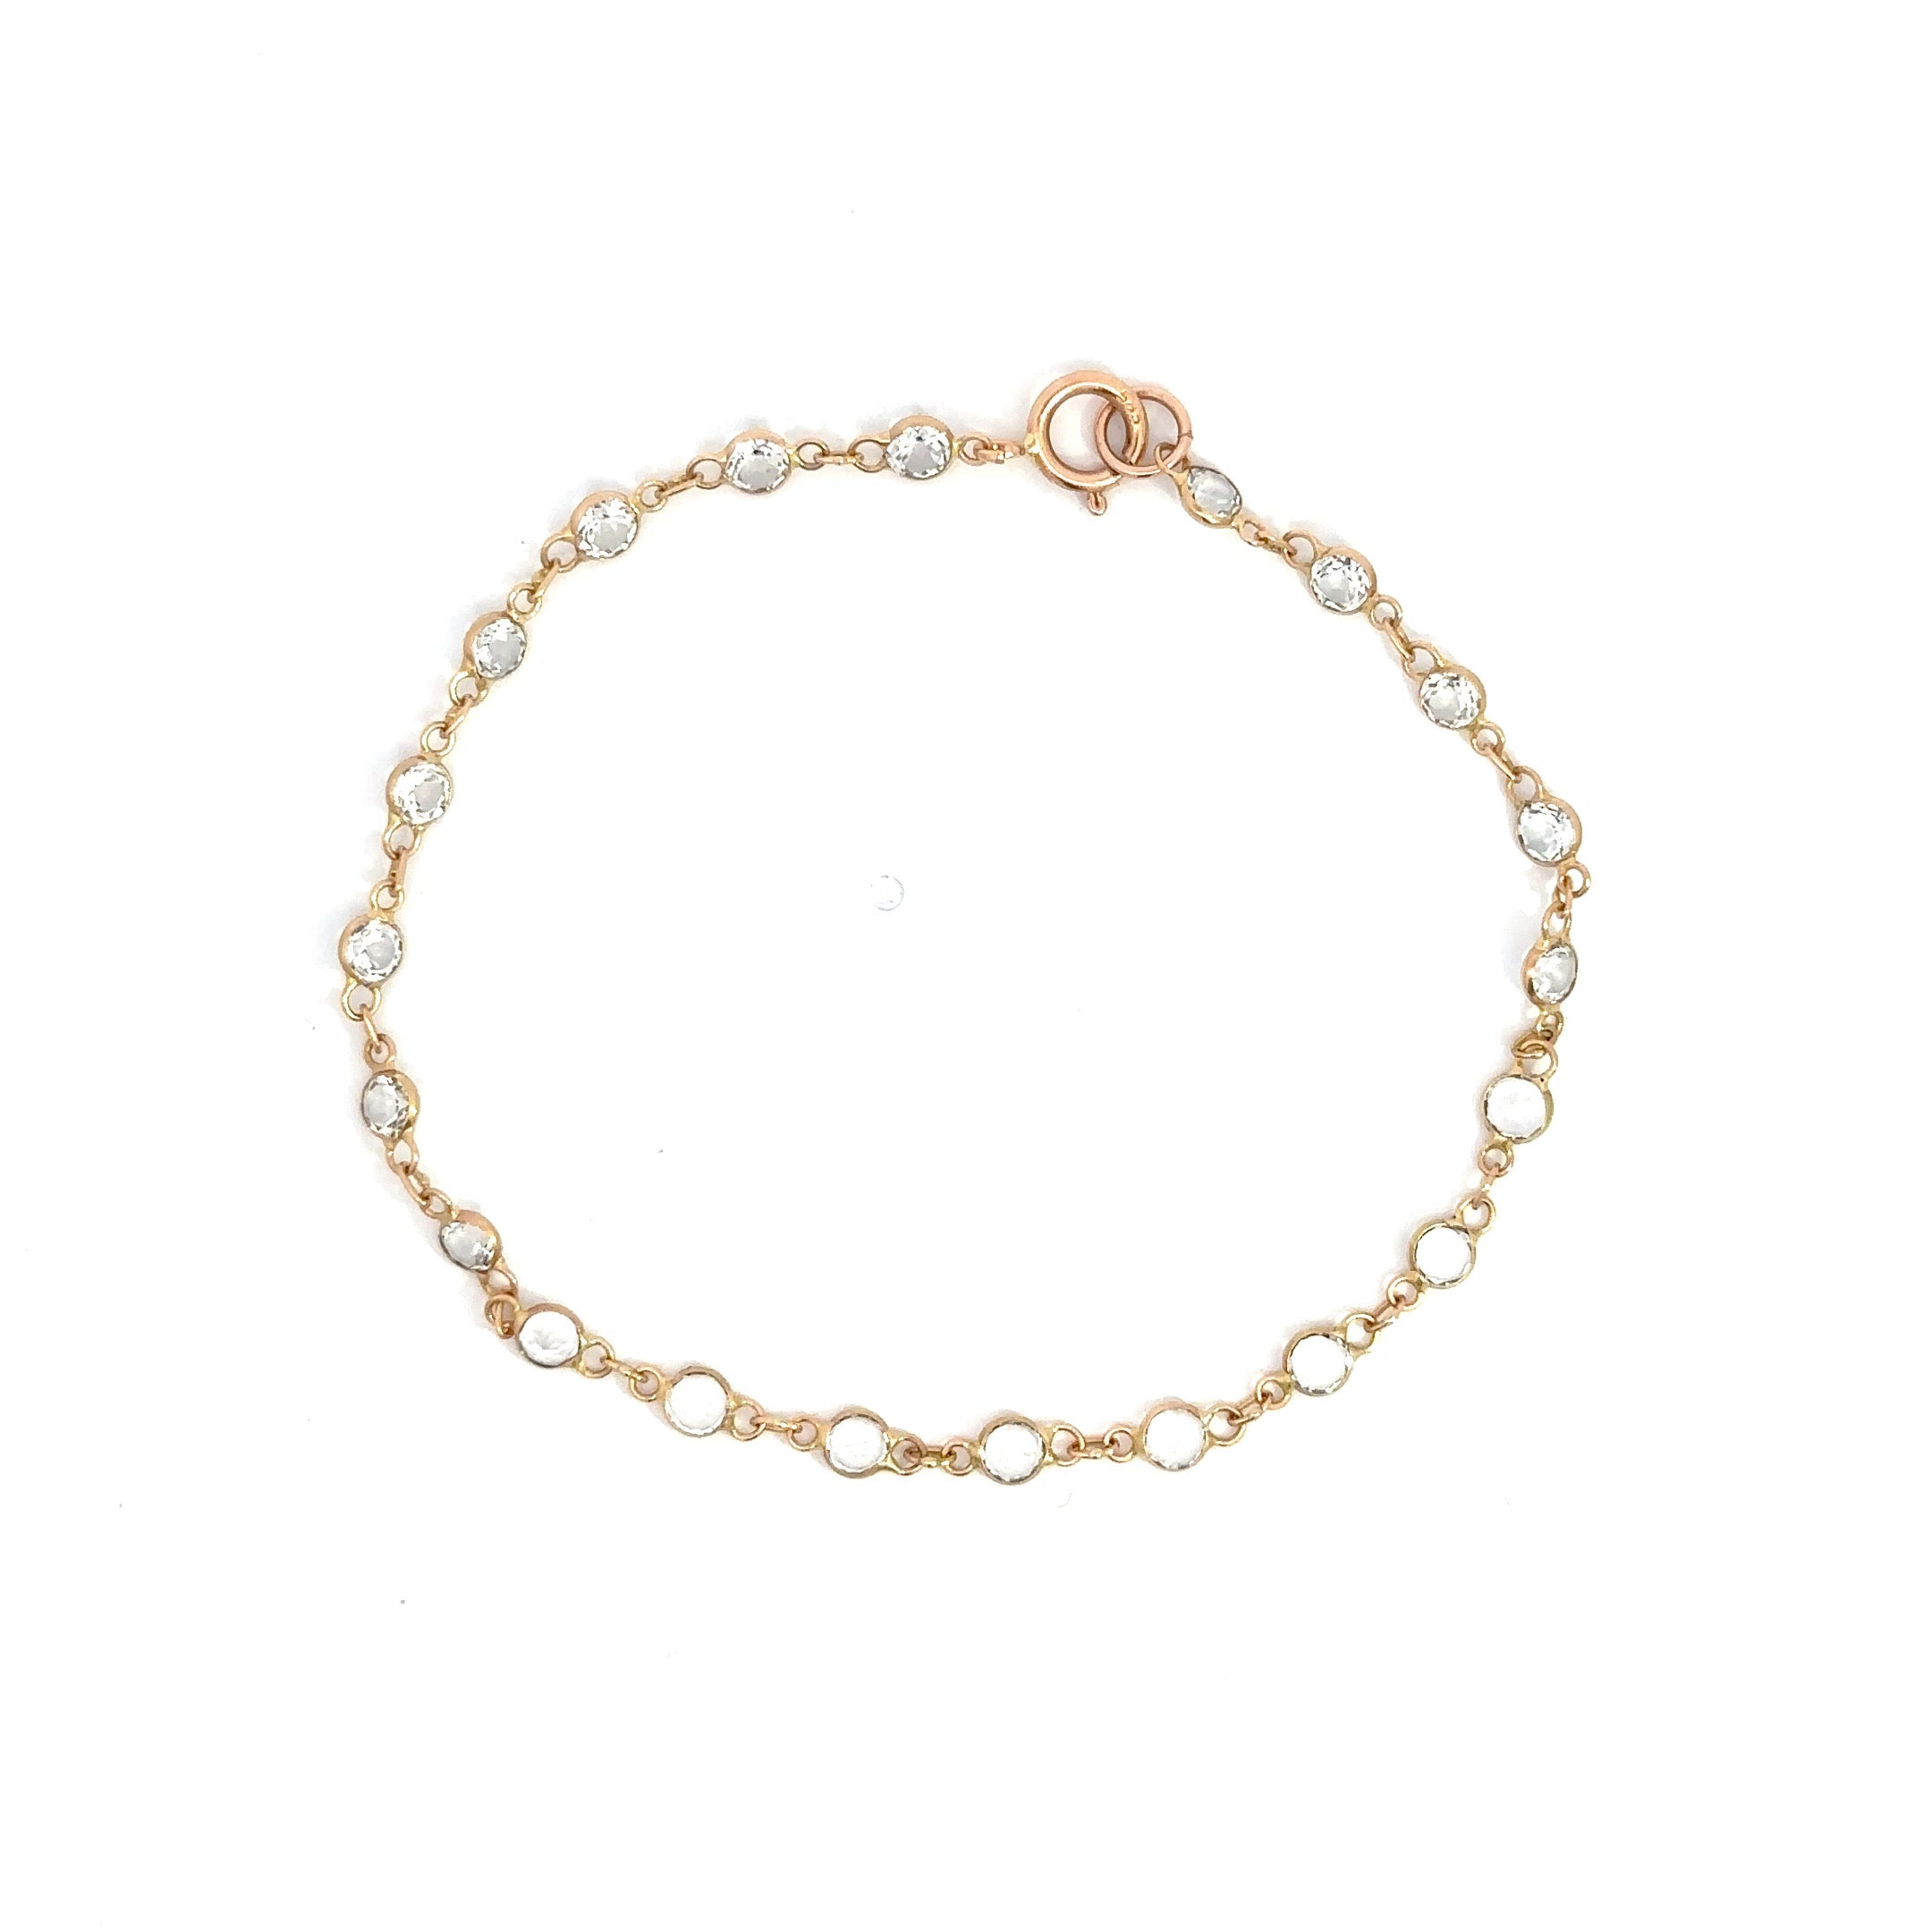 WD619 14kt gold, bezeled white topaz bracelet